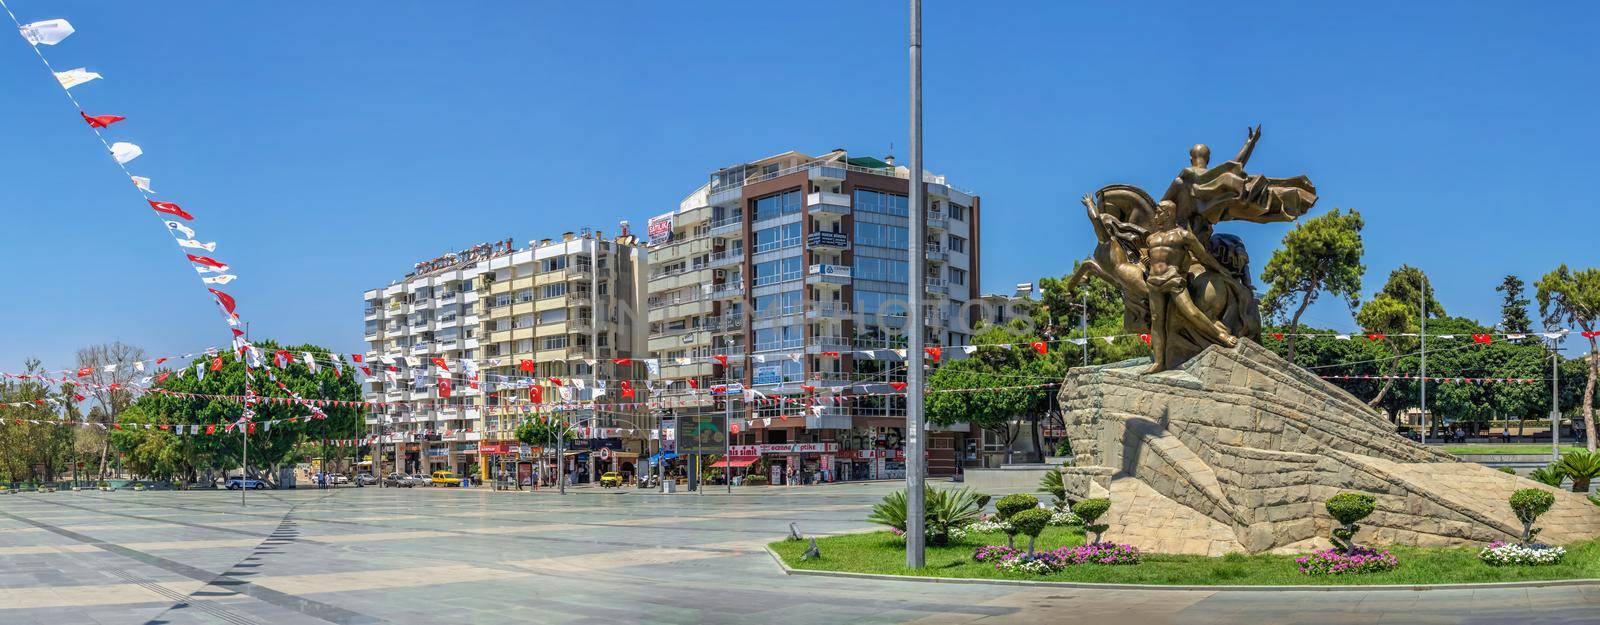 Republic square in Antalya, Turkey by Multipedia